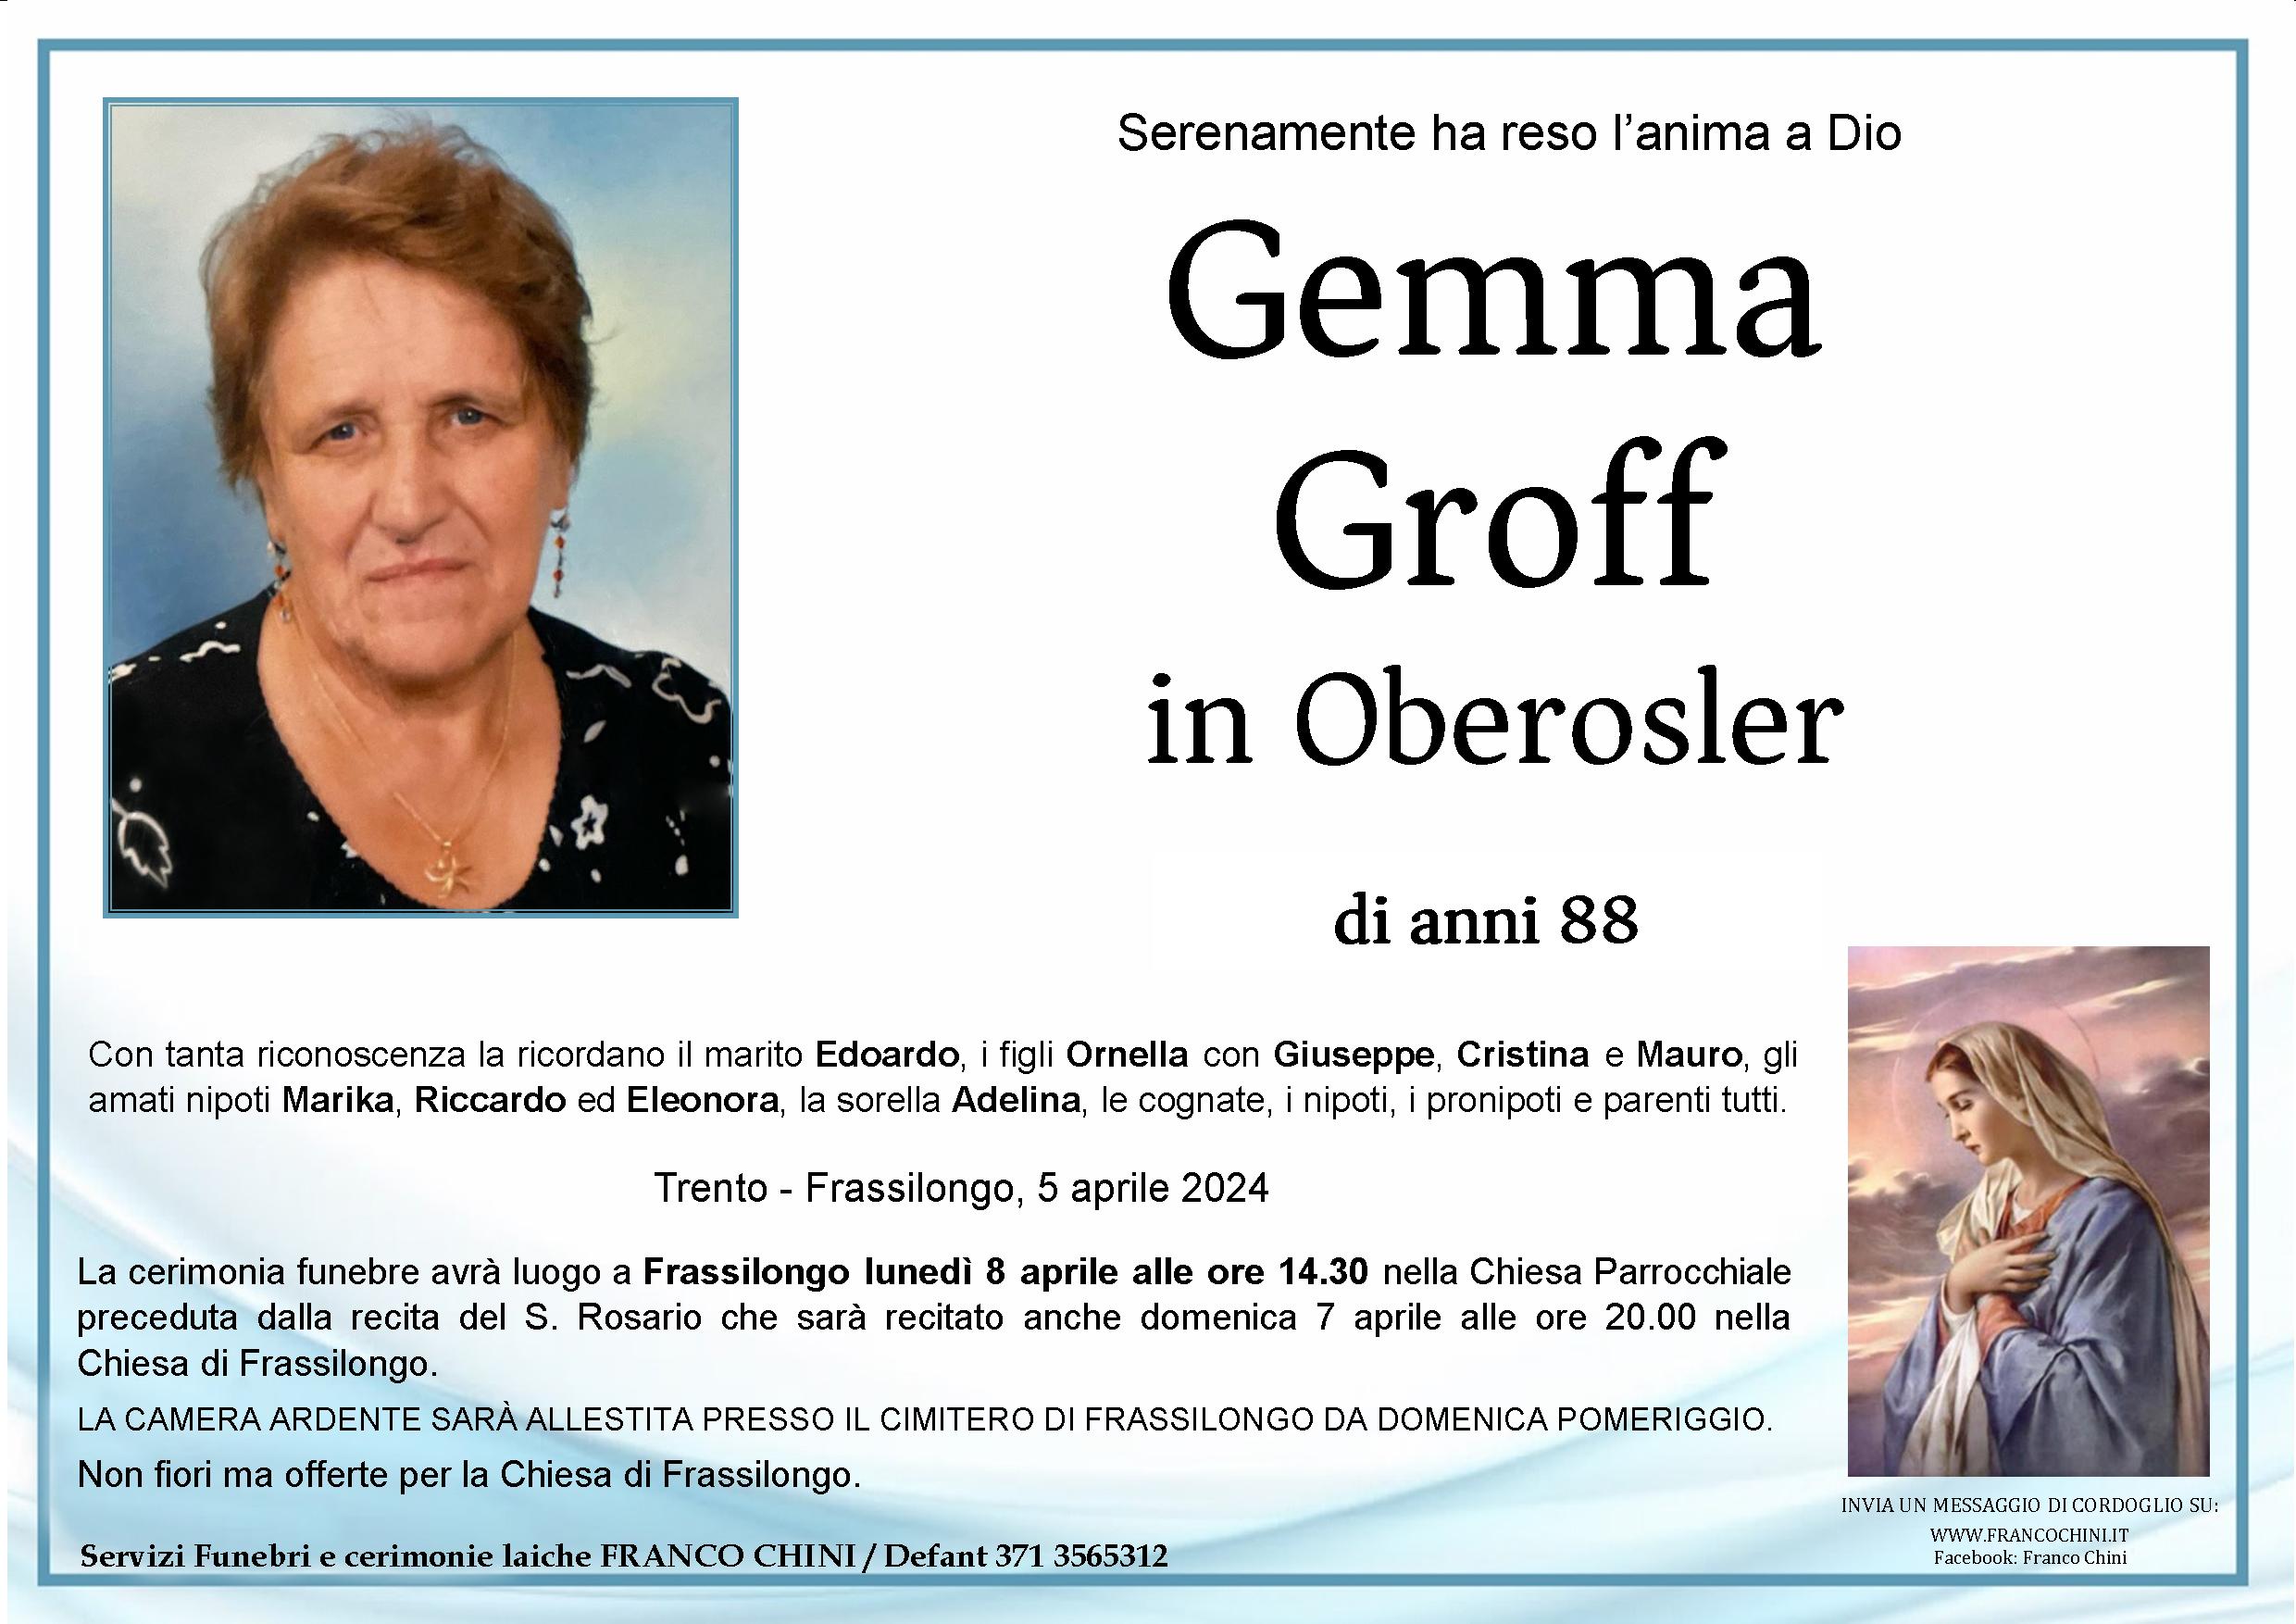 Gemma Groff